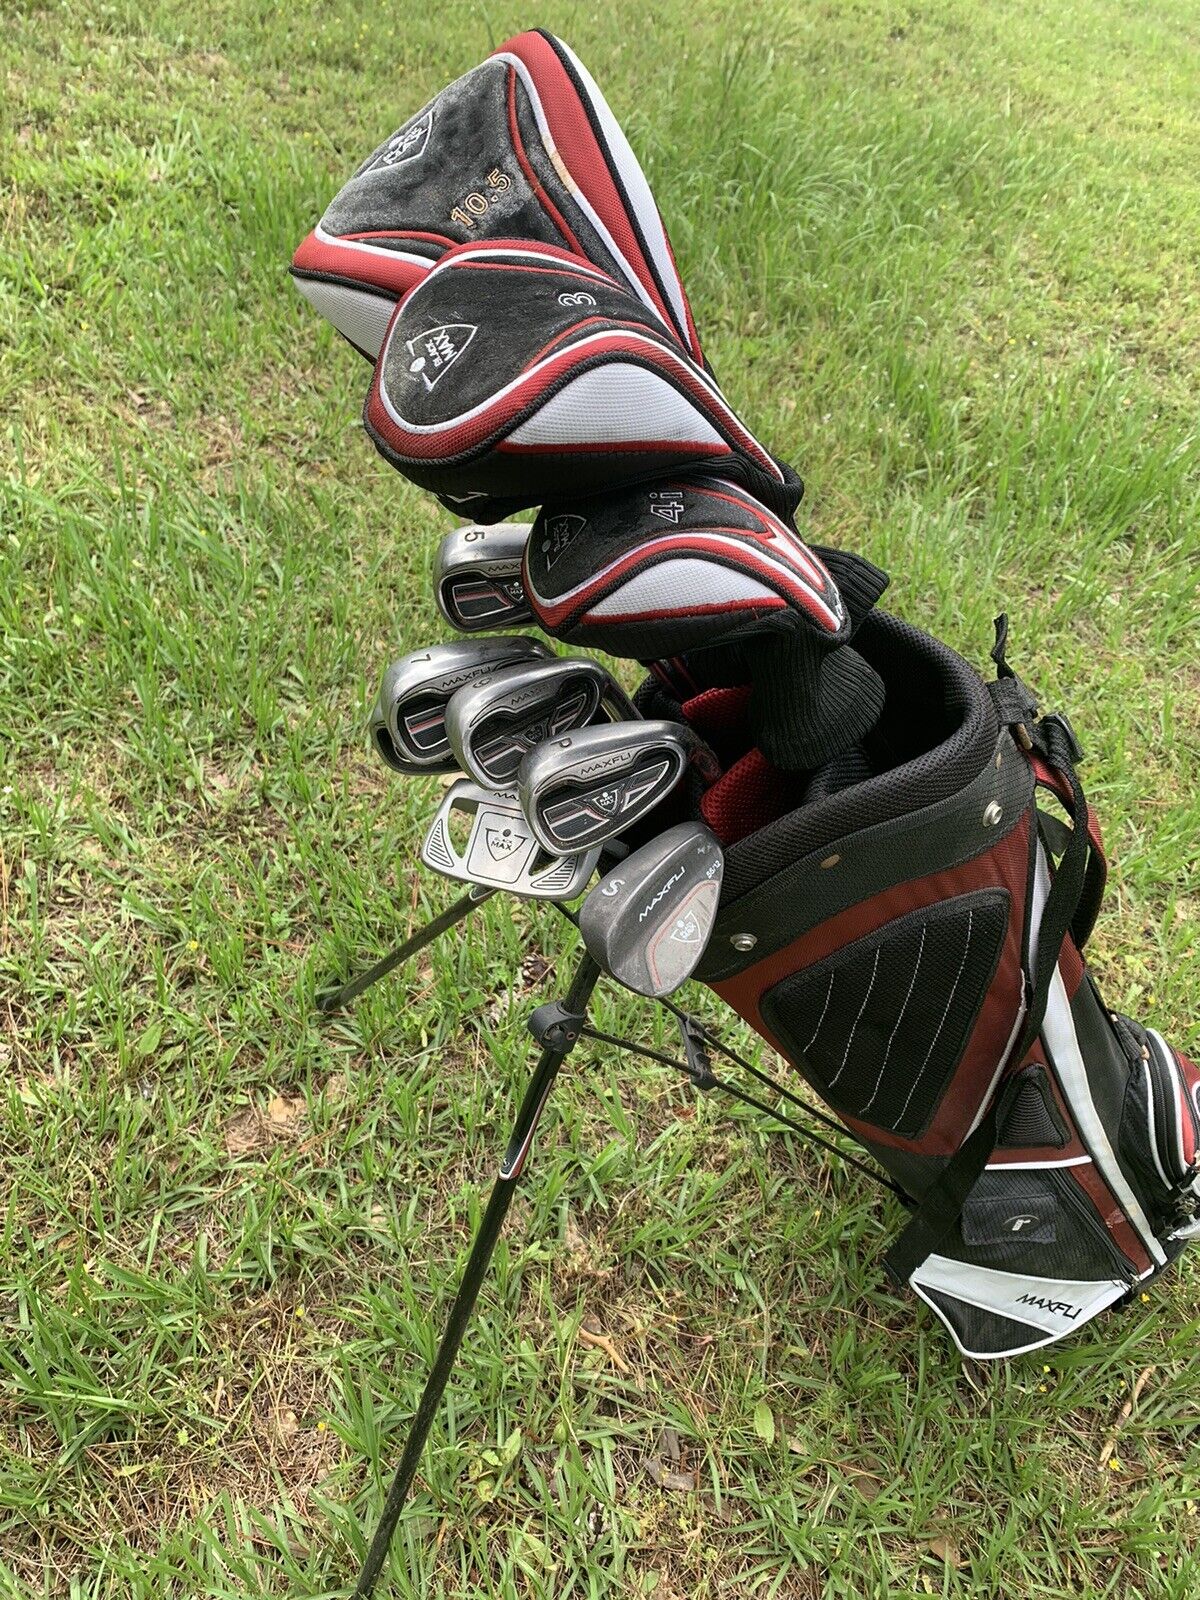 golf club set with bag (maxfli blackmax topflight) 12 Piece